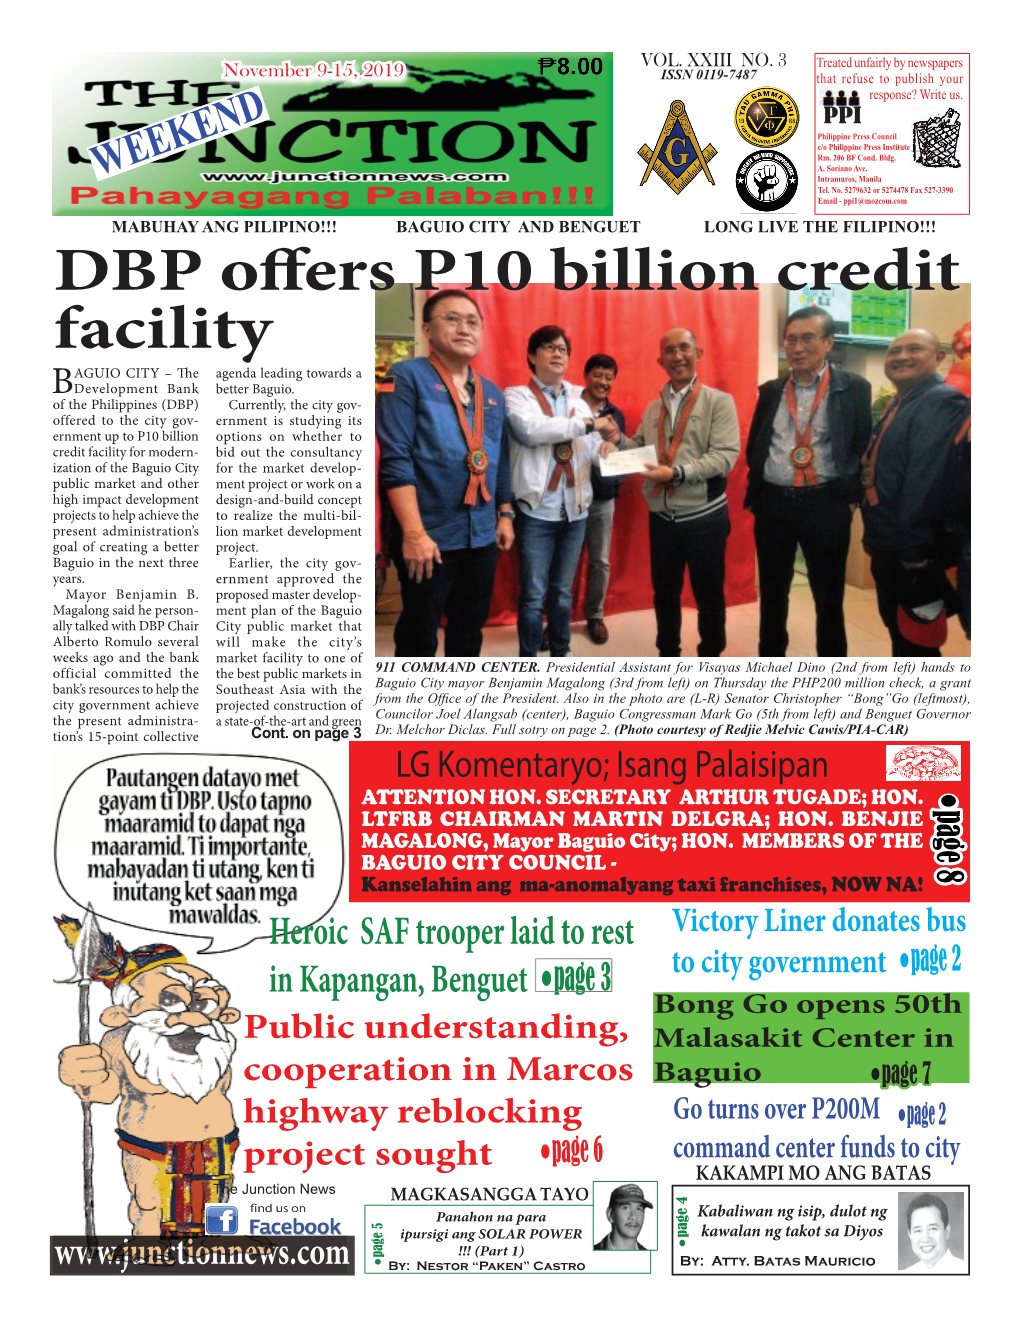 DBP Offers P10 Billion Credit Facility